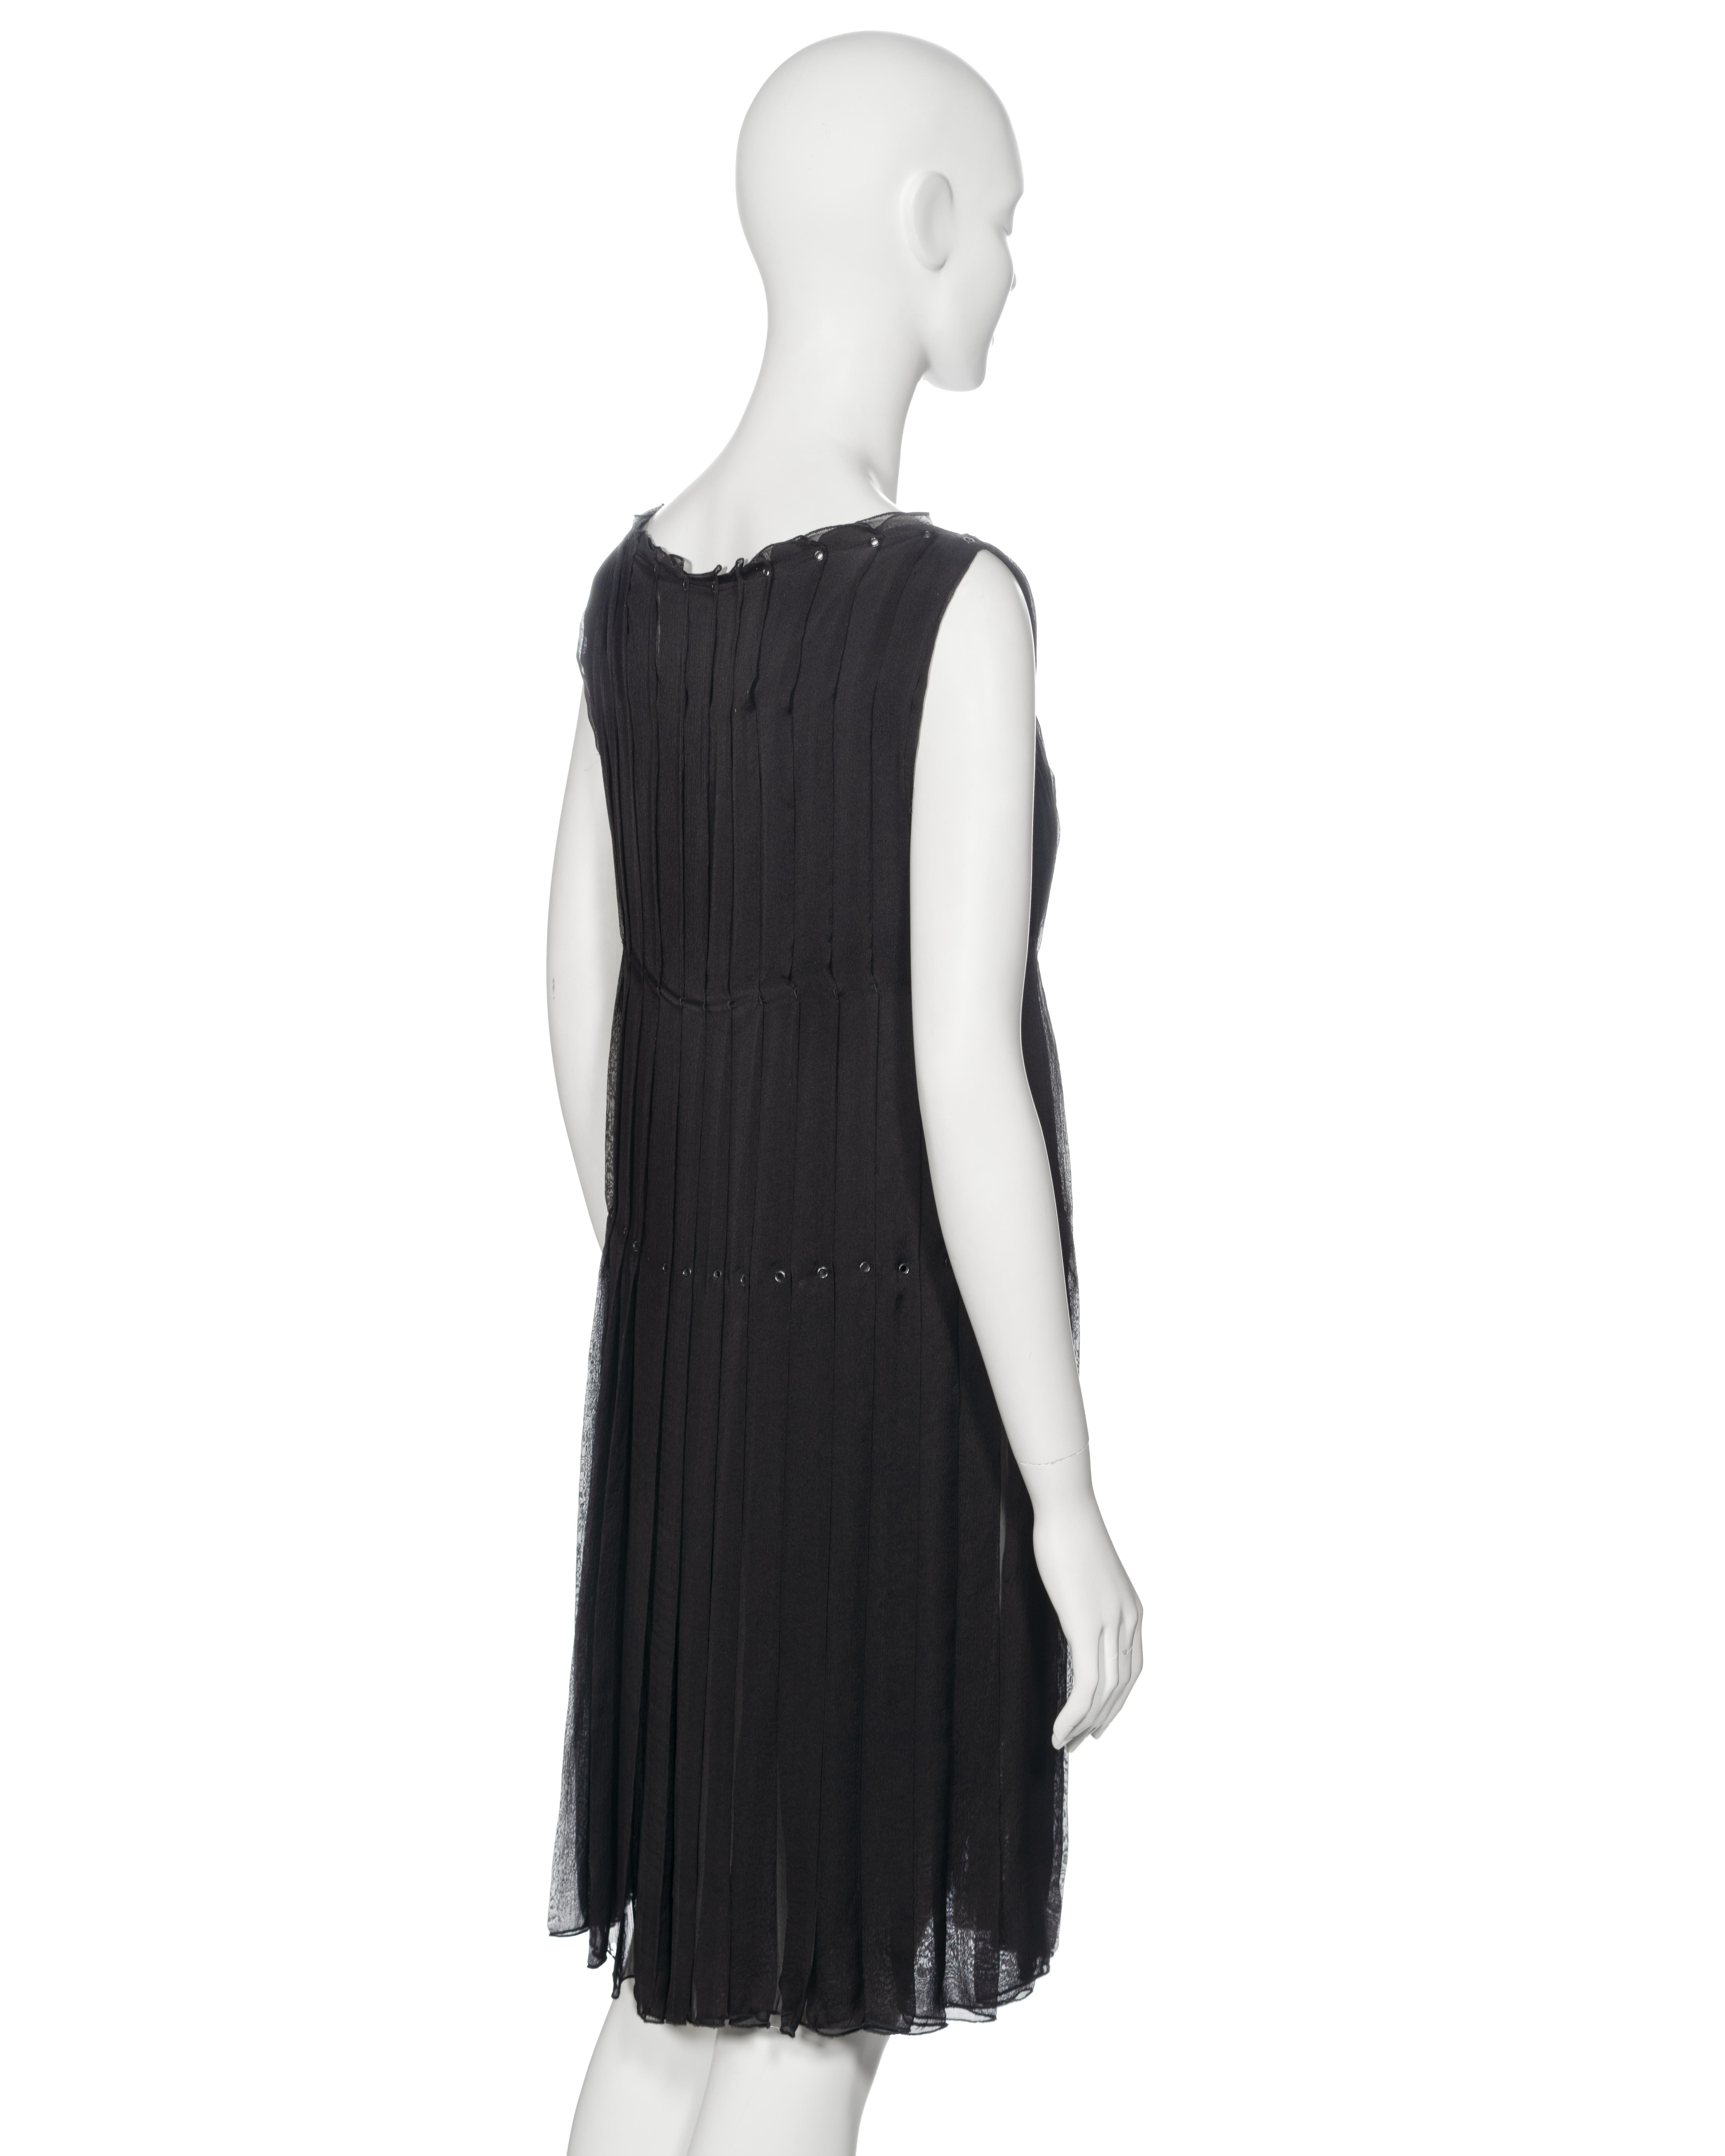 Prada by Miuccia Prada Black Silk Chiffon Box Pleated Shift Dress, ss 2000 For Sale 8